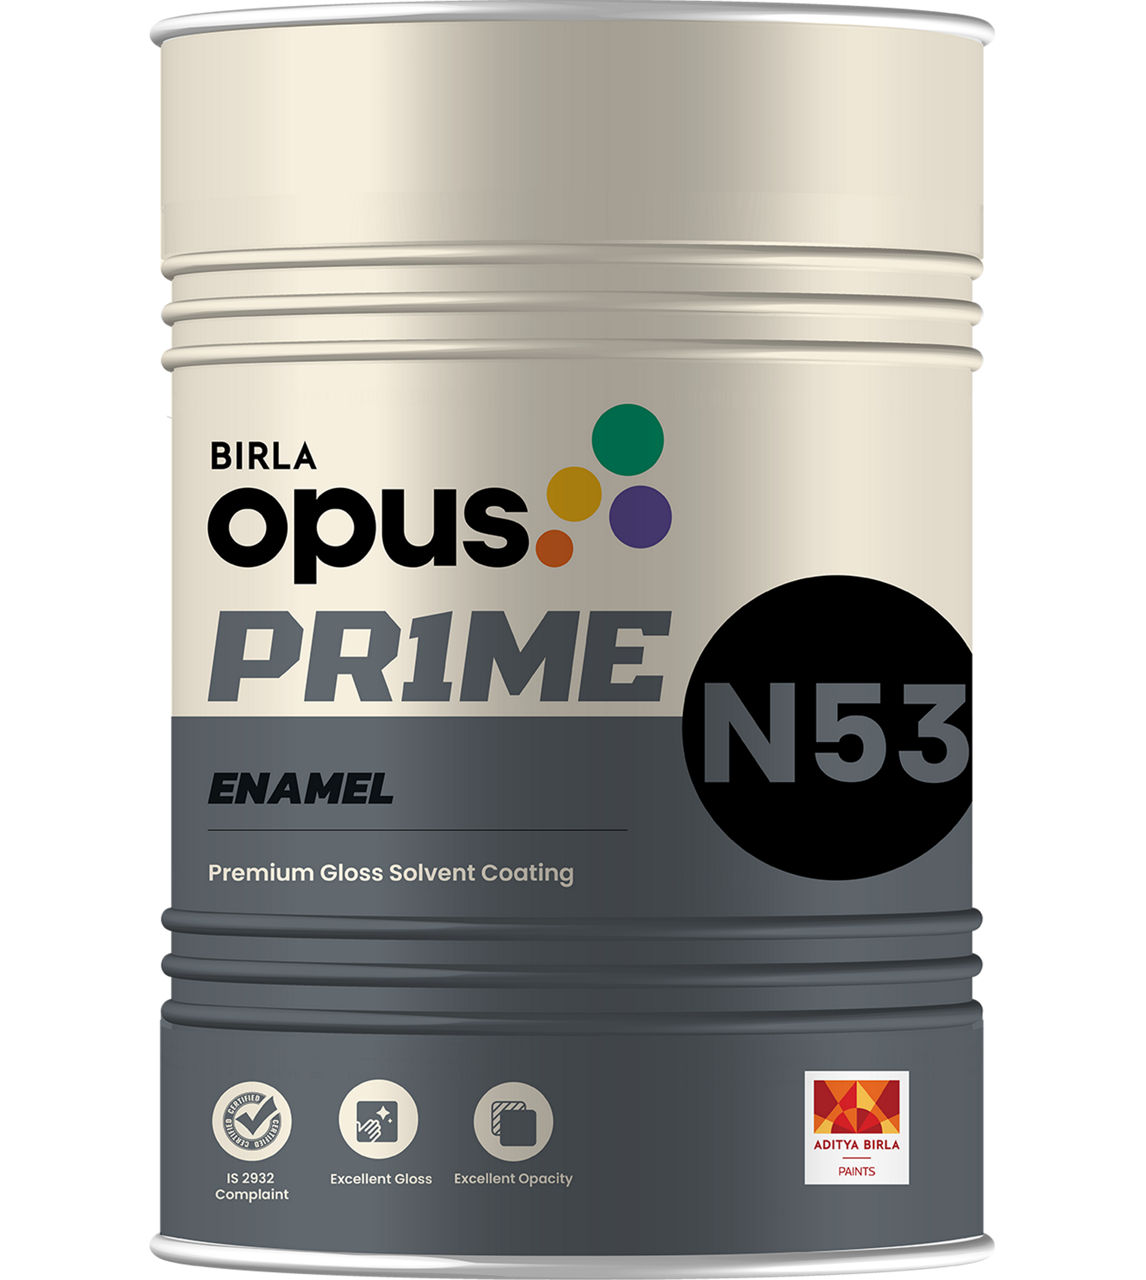 N53 Enamel Premium Gloss Solvent Coating